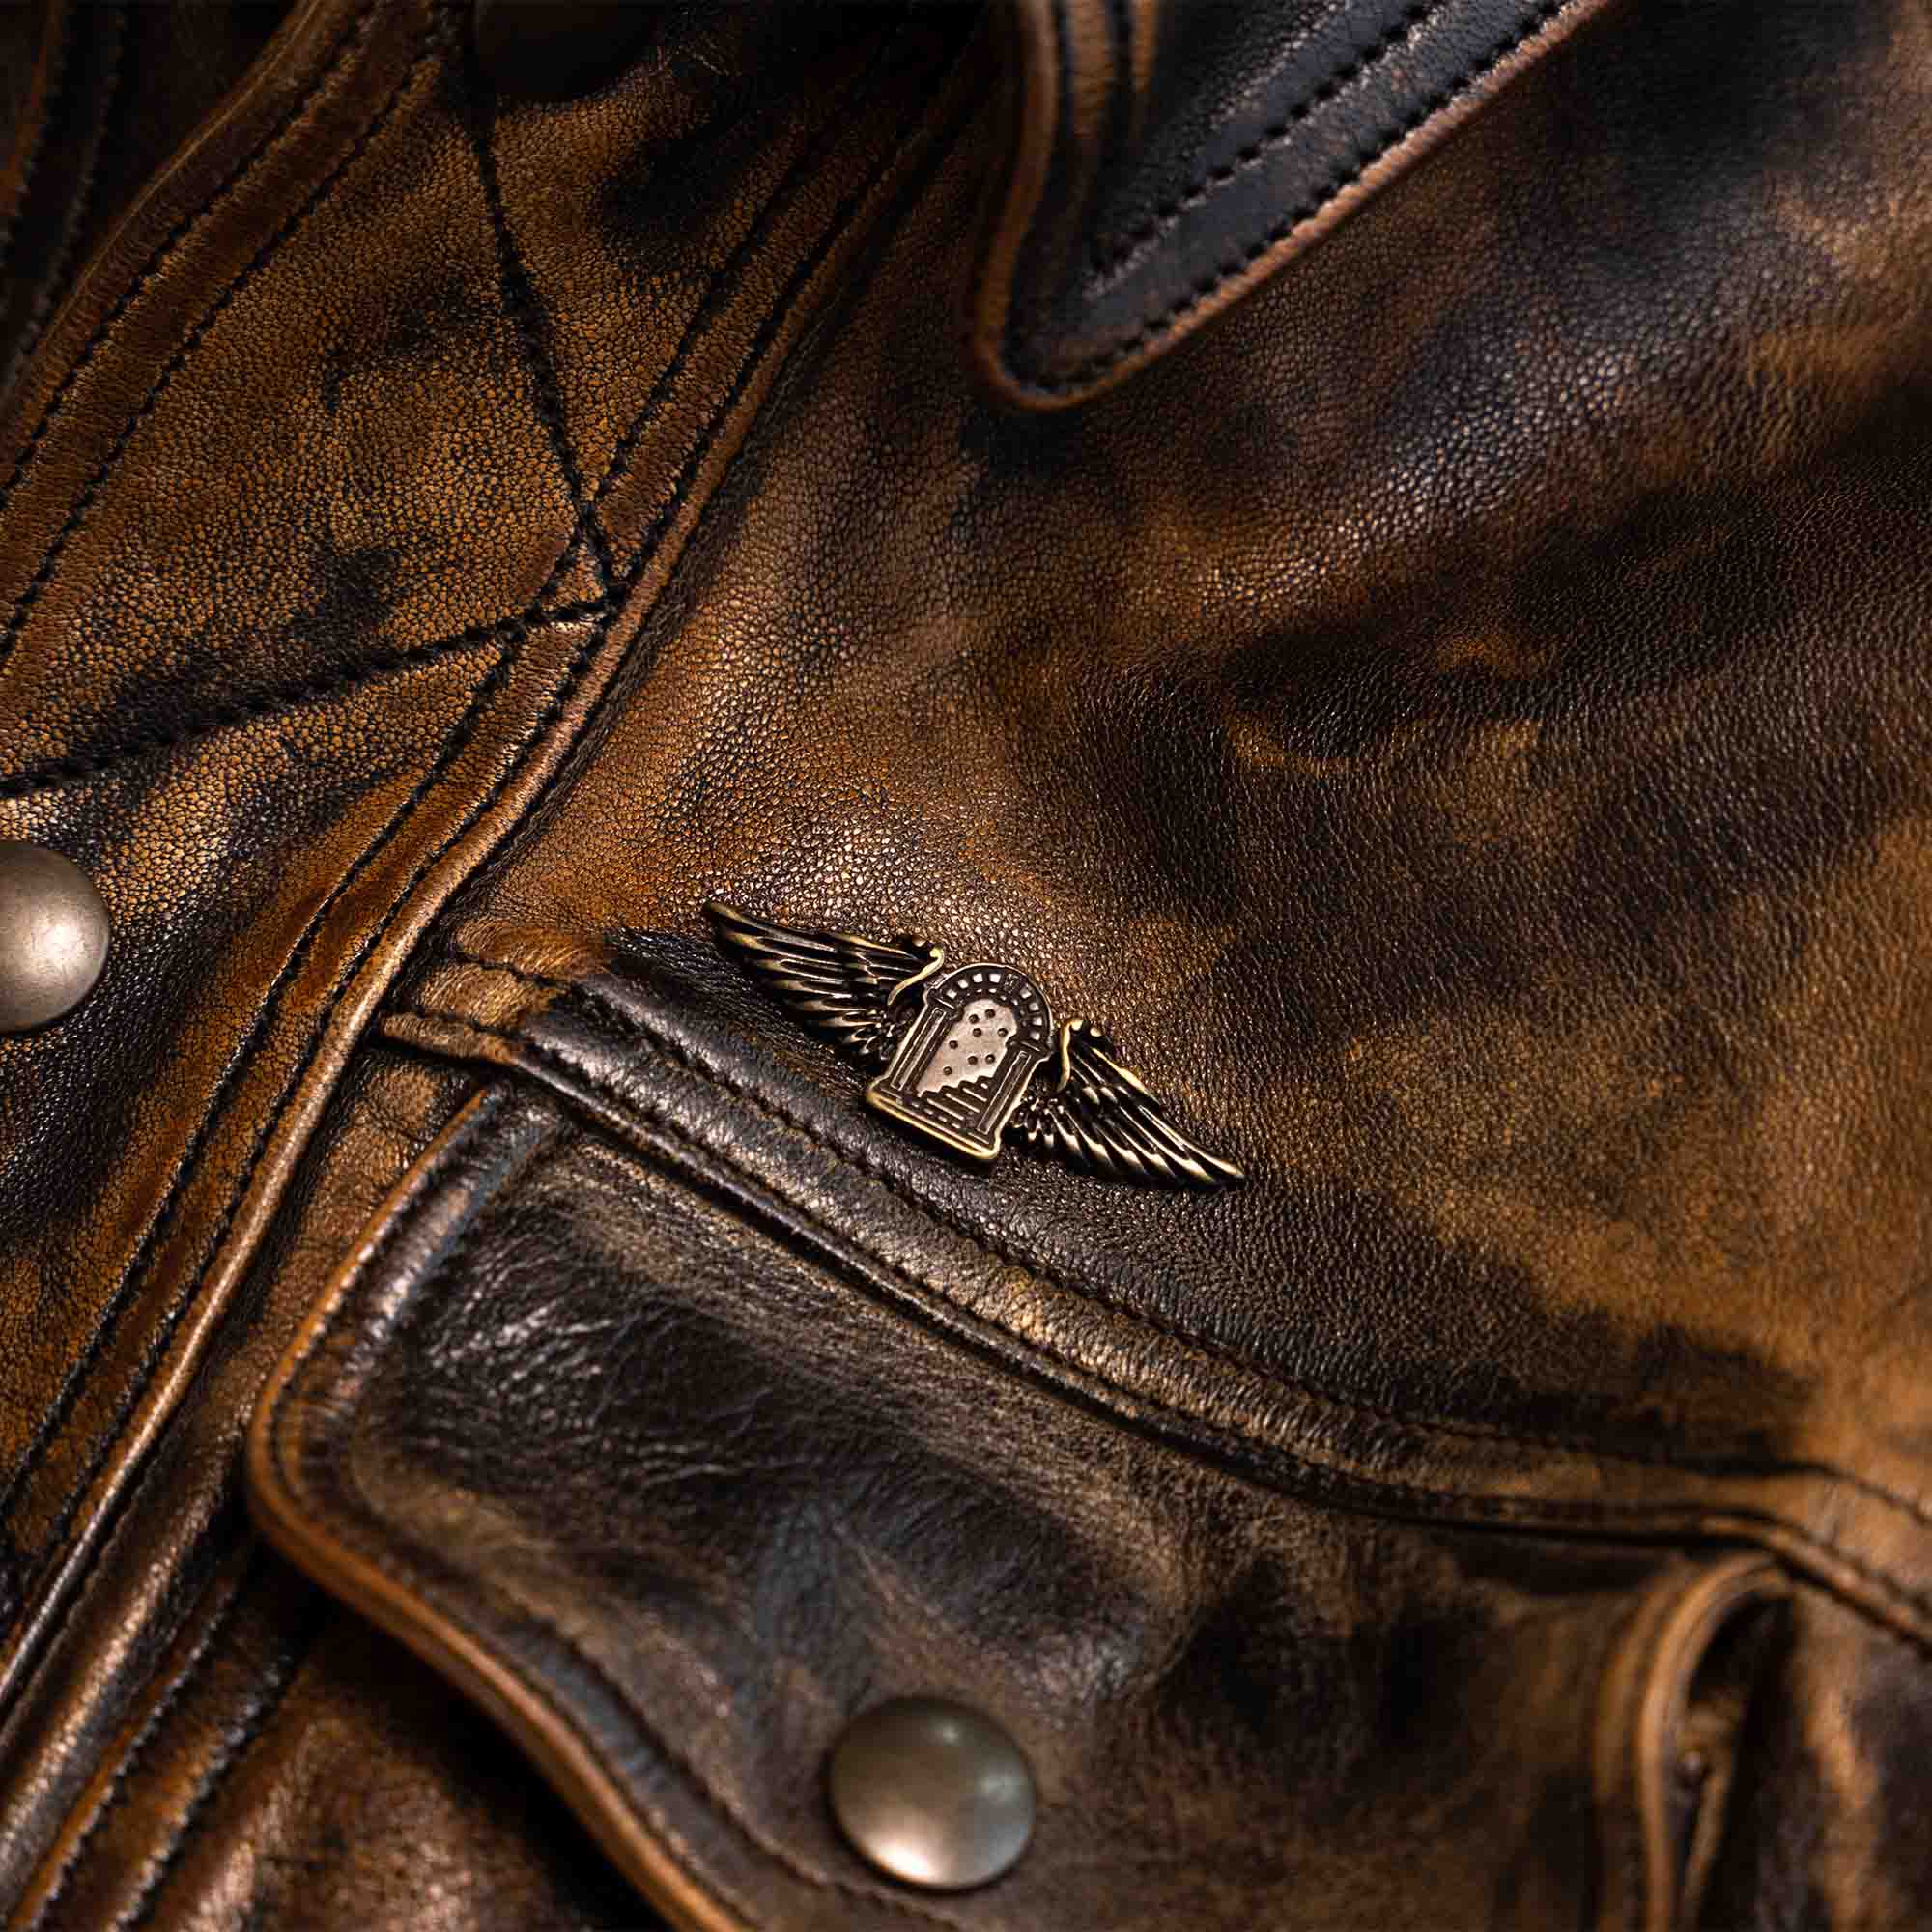 "Terracotta" Deserto Leather Jacket